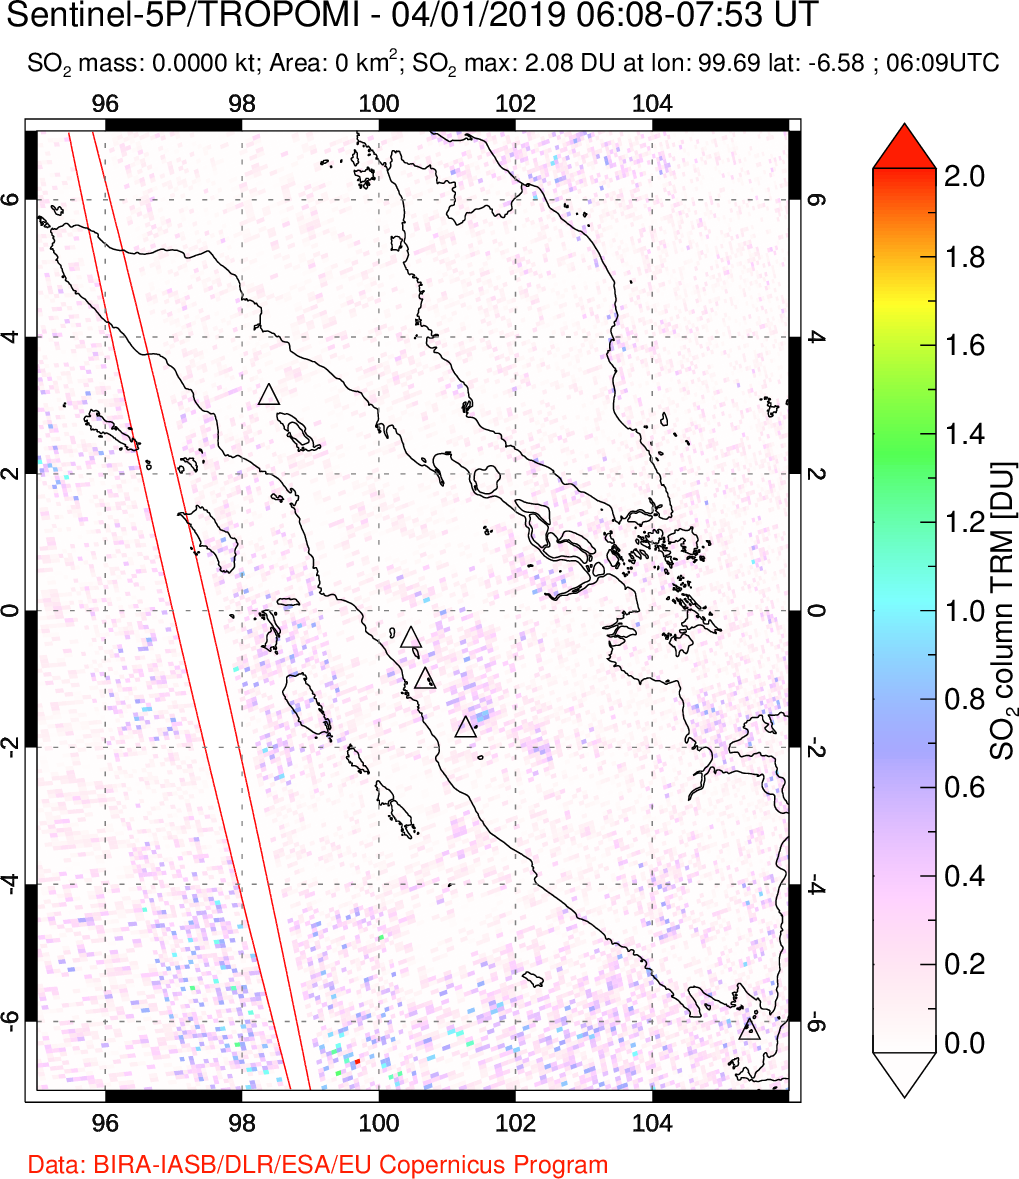 A sulfur dioxide image over Sumatra, Indonesia on Apr 01, 2019.